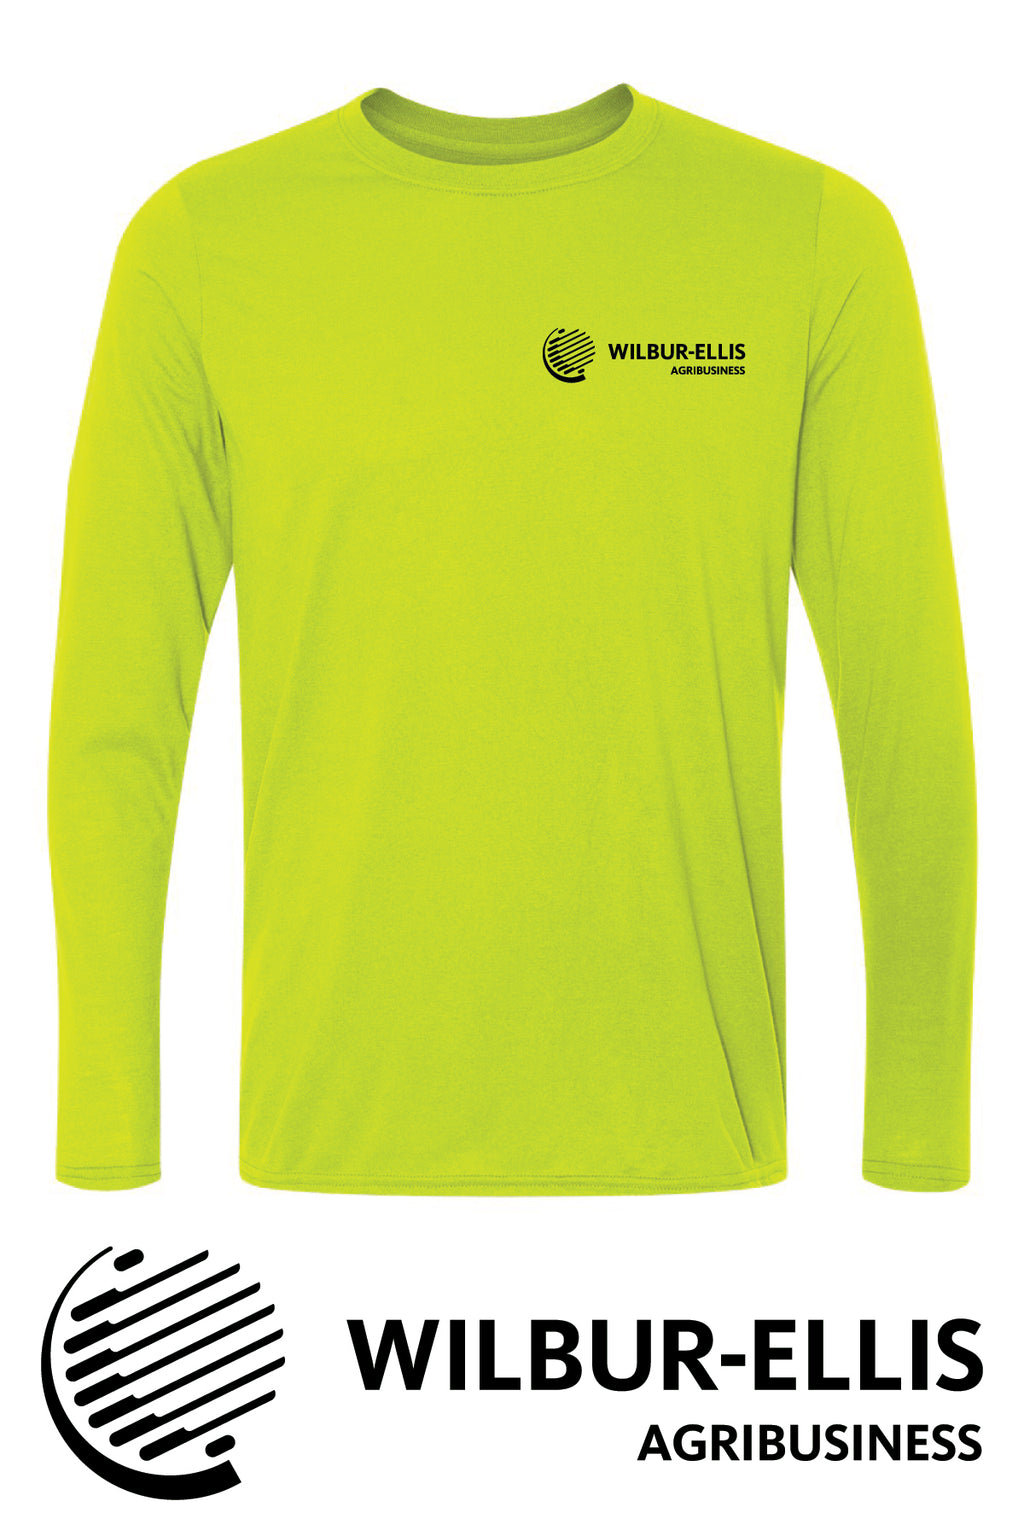 Wilbur-Ellis Safety Performance Long Sleeve Shirt - 42400